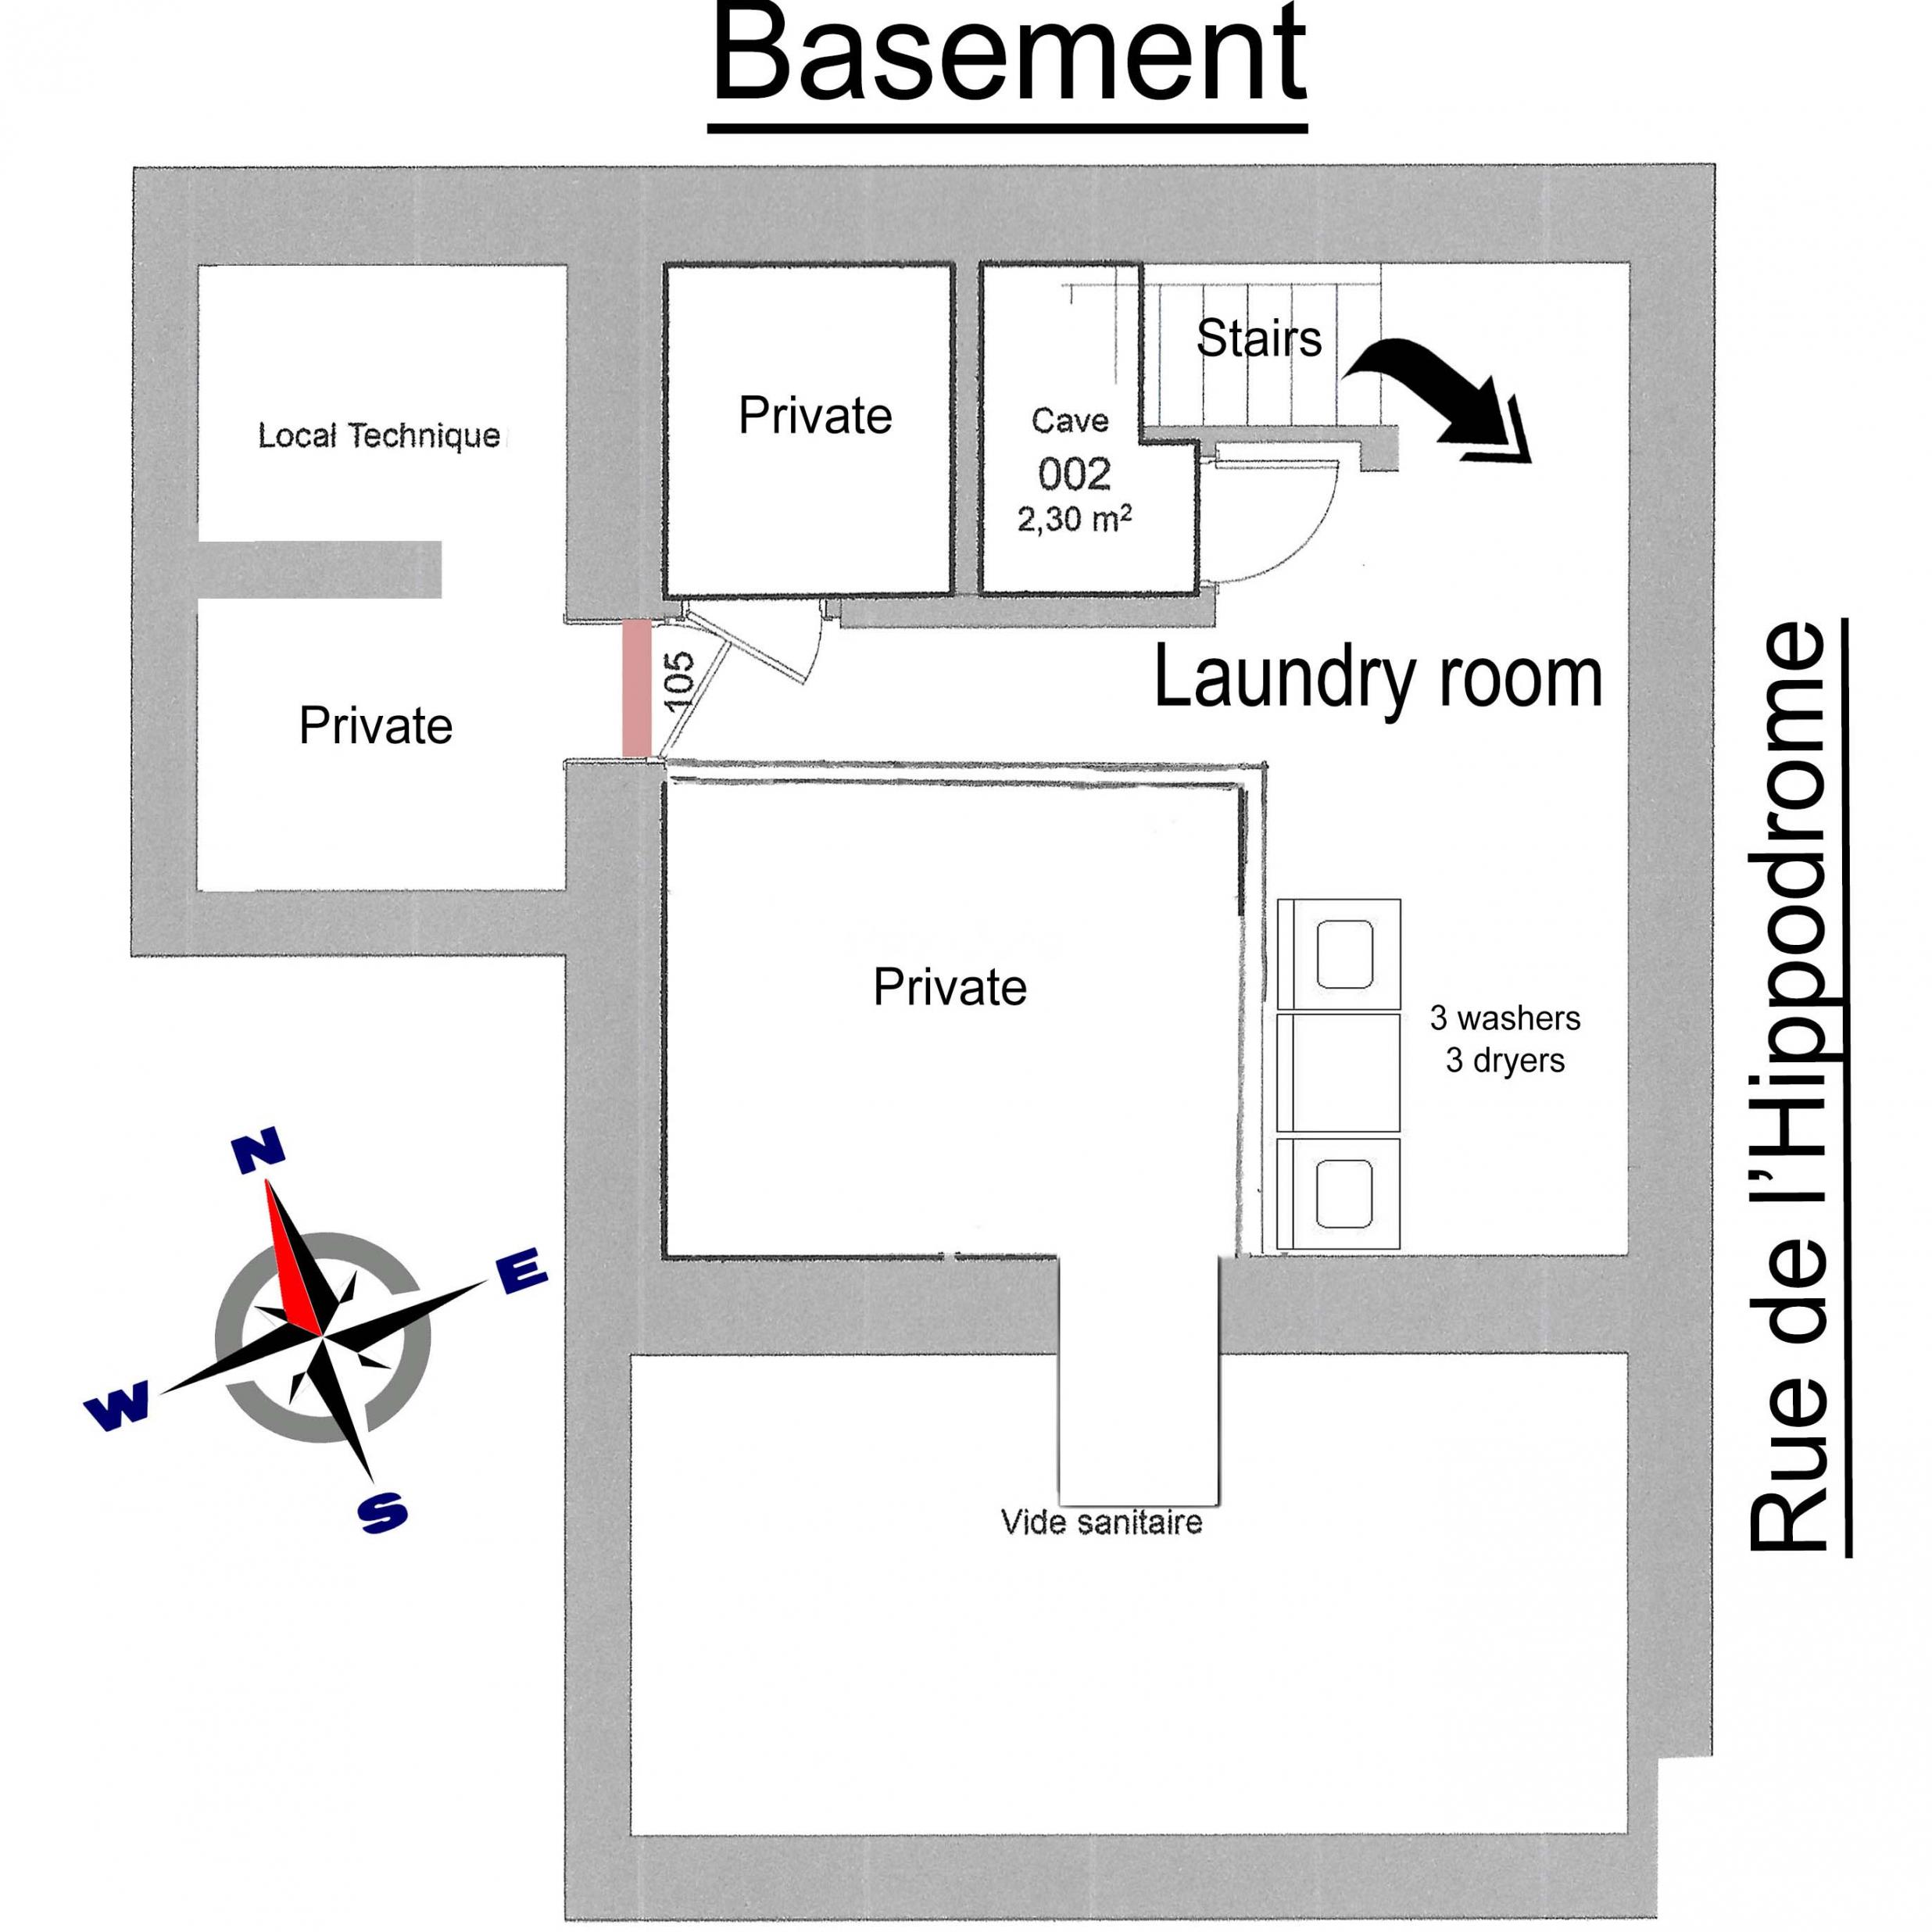 Hippodrome - Basement floor map